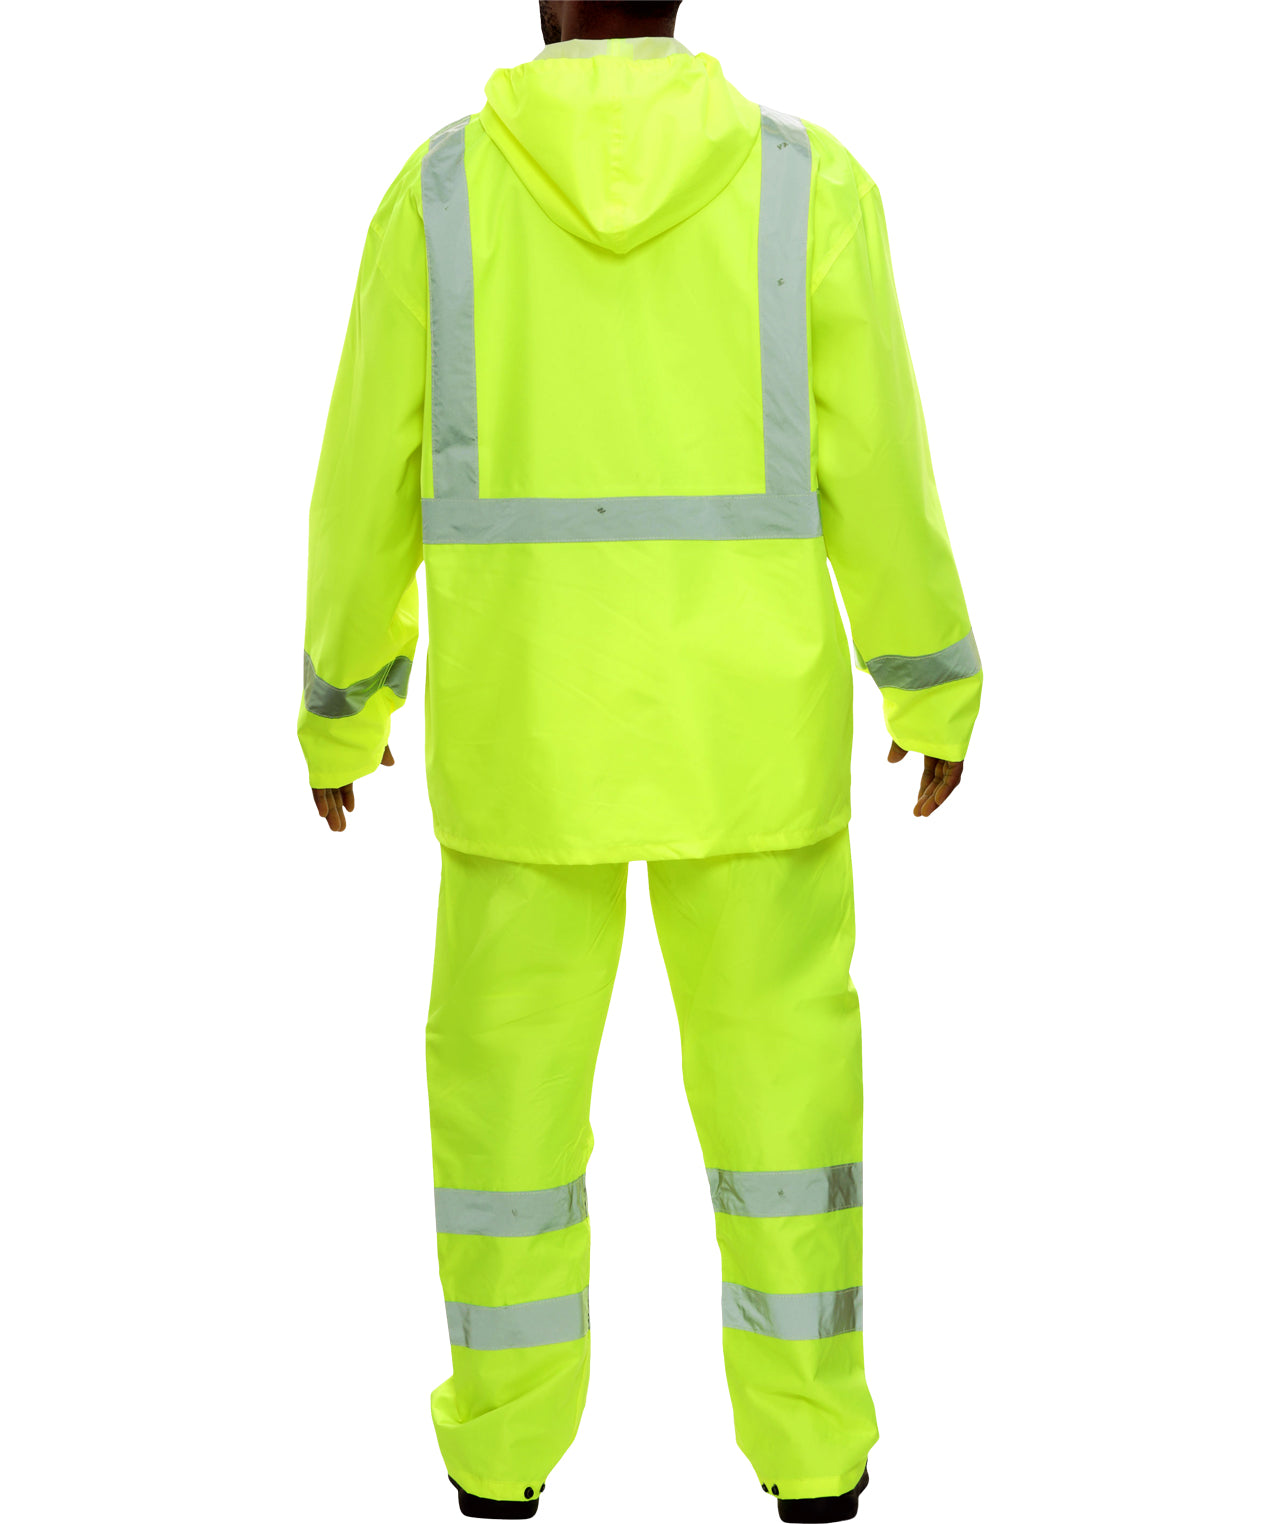 402STLM Safety Raingear: Hi-Vis Rainsuit: Waterproof Hooded Parka & Pants